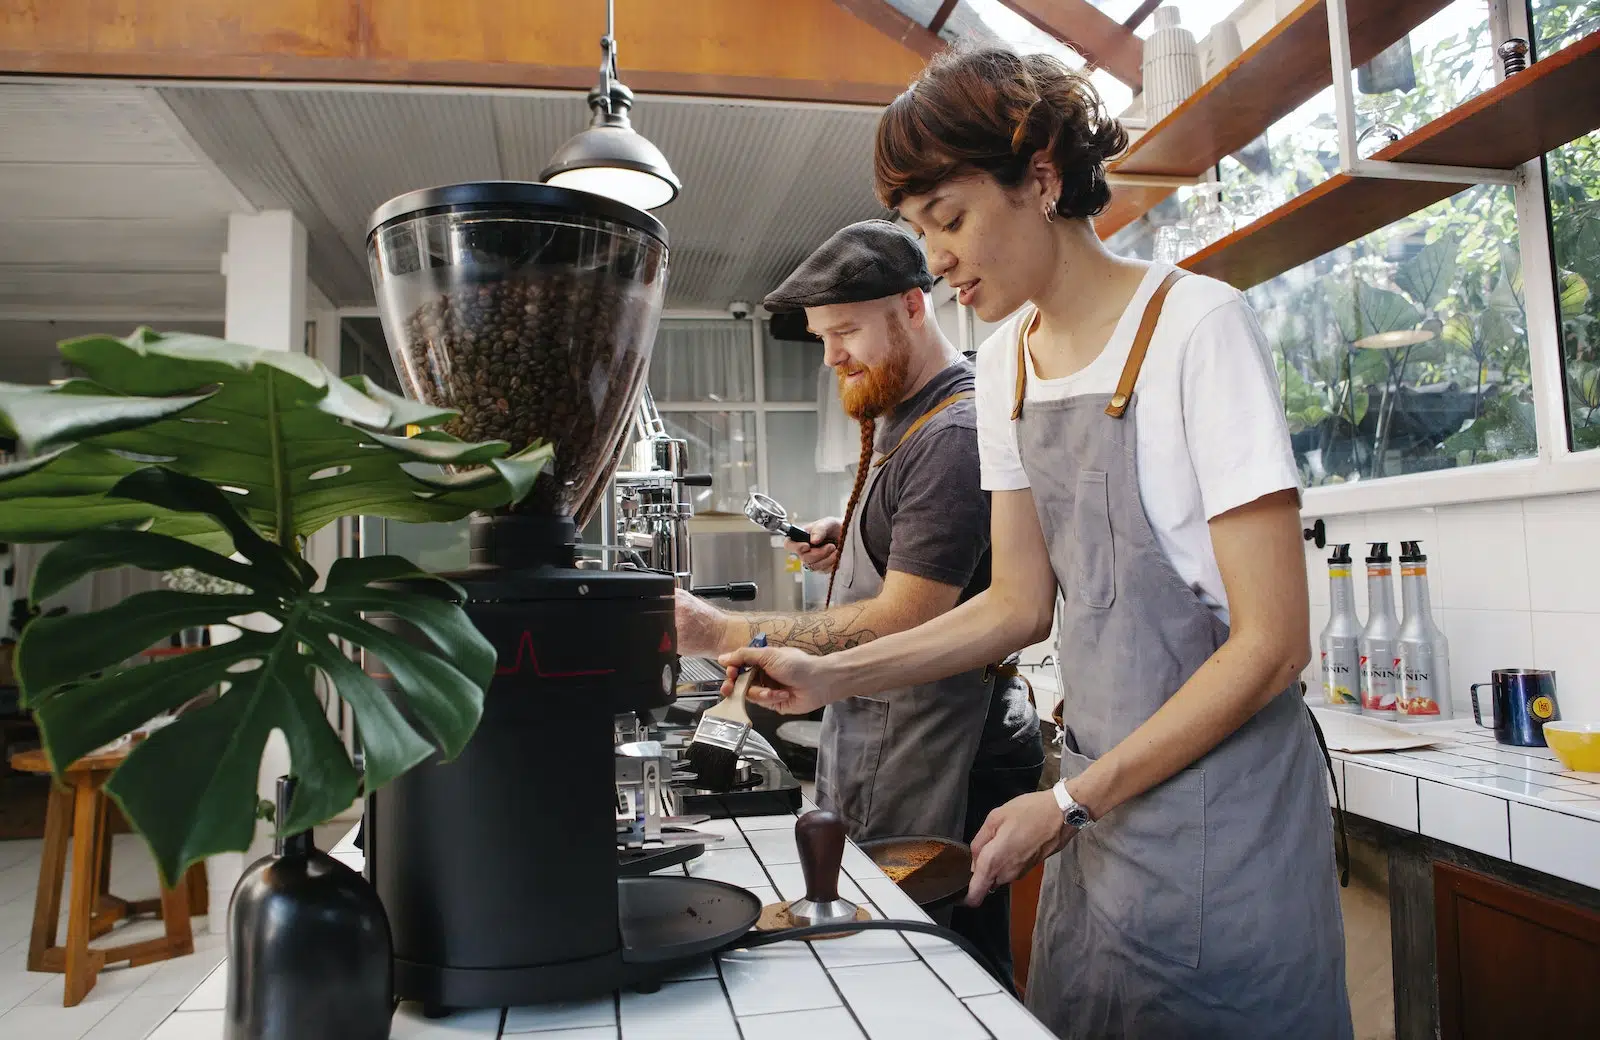 Baristas preparing coffee in machines in cafe kitchen